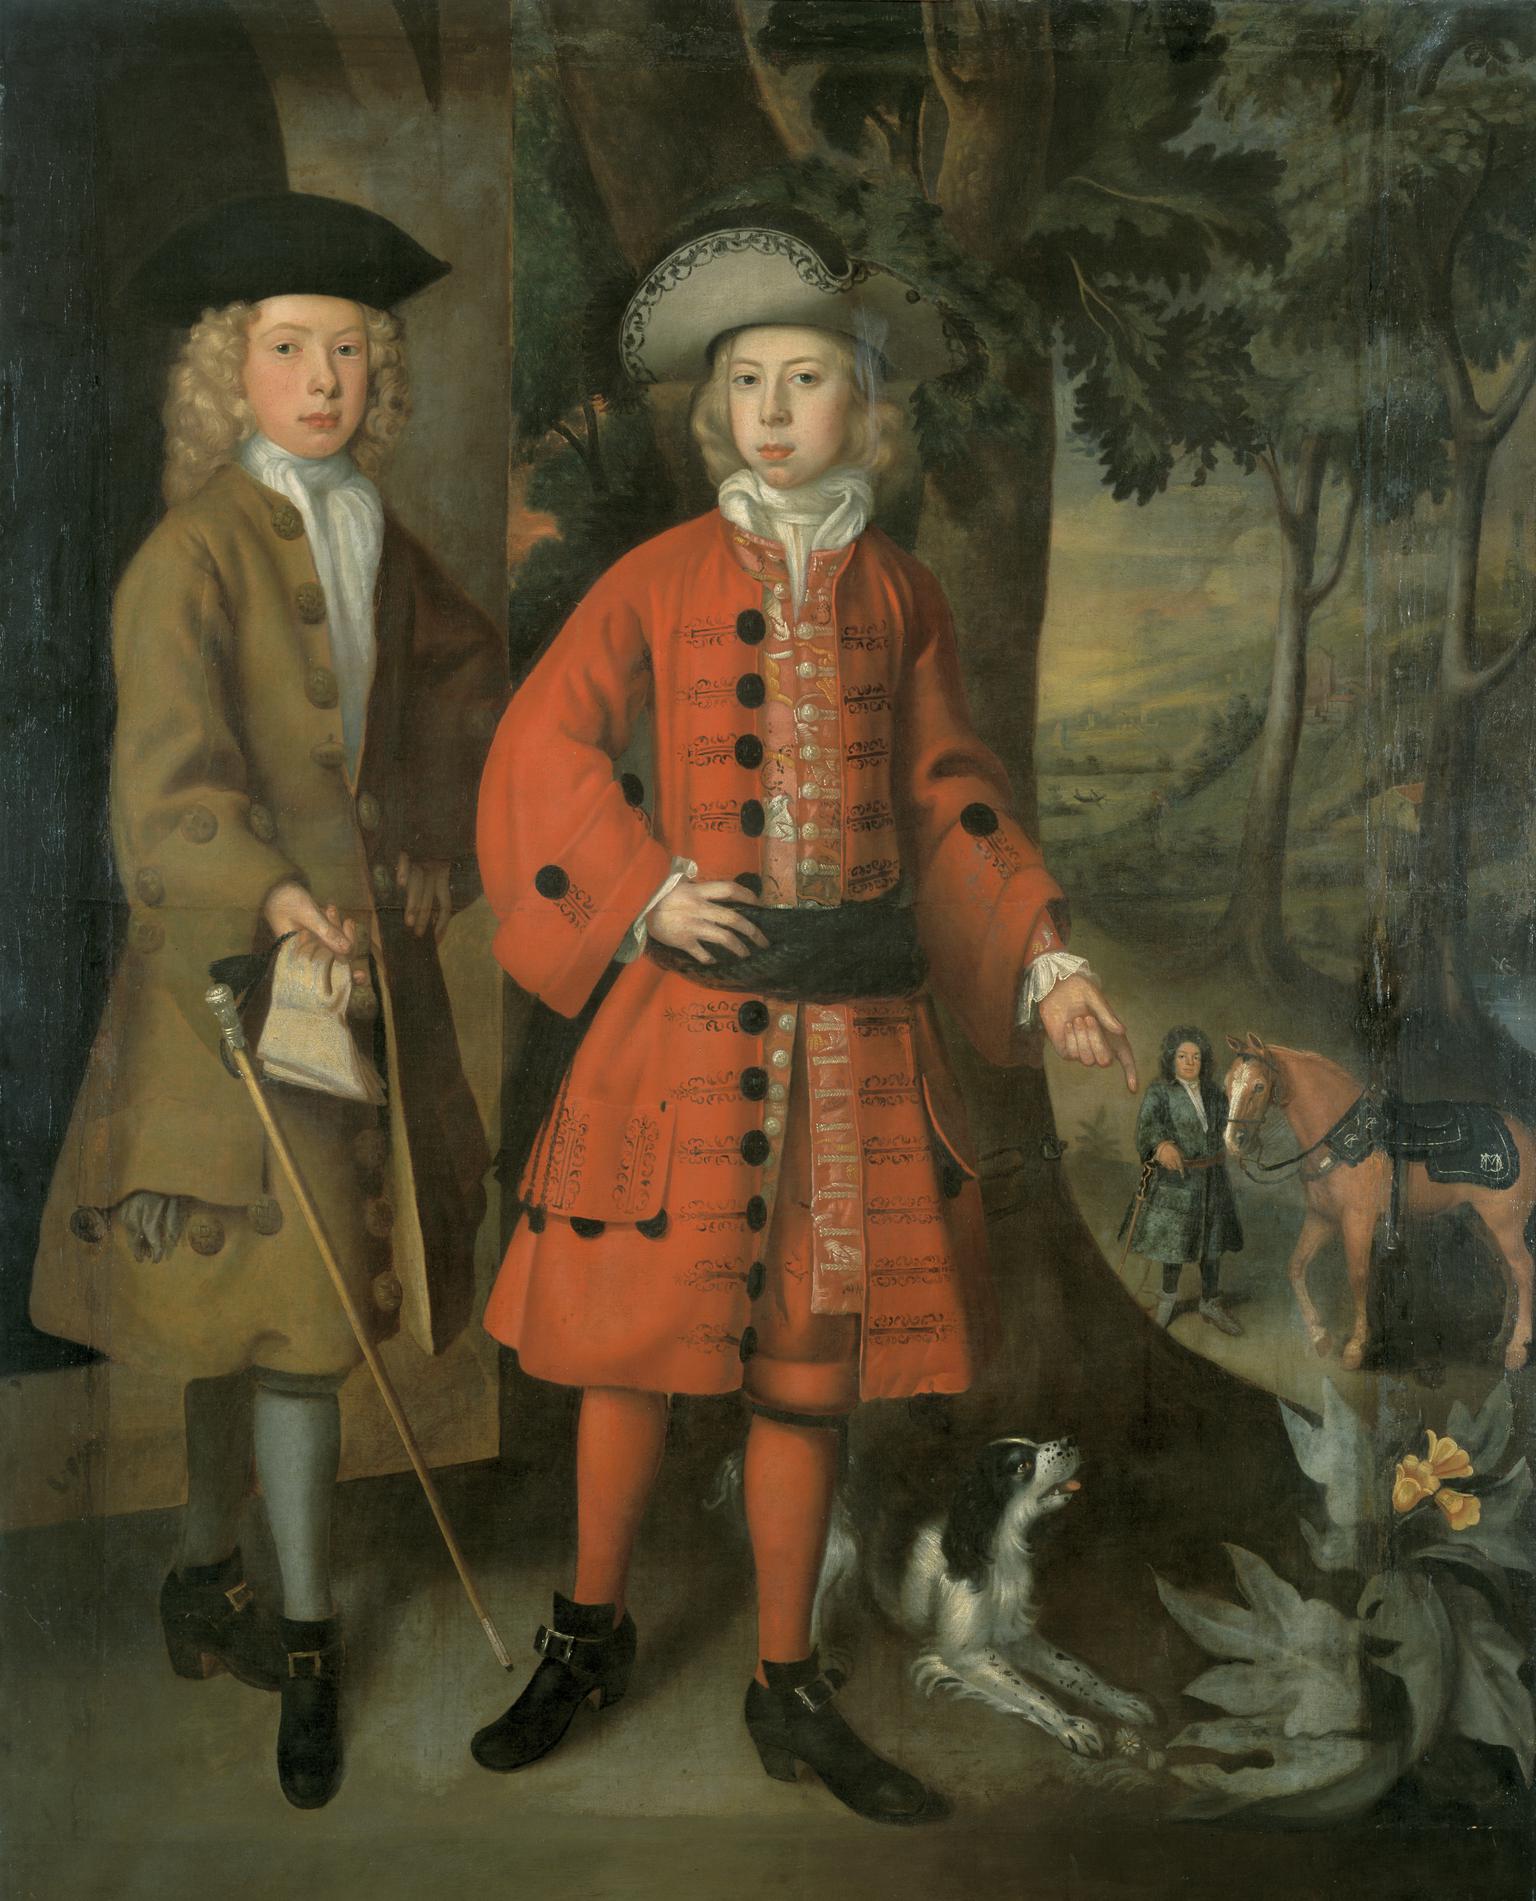 Sir Charles Kemeys (1688-1734) and possibly William Morgan (1688-1699)